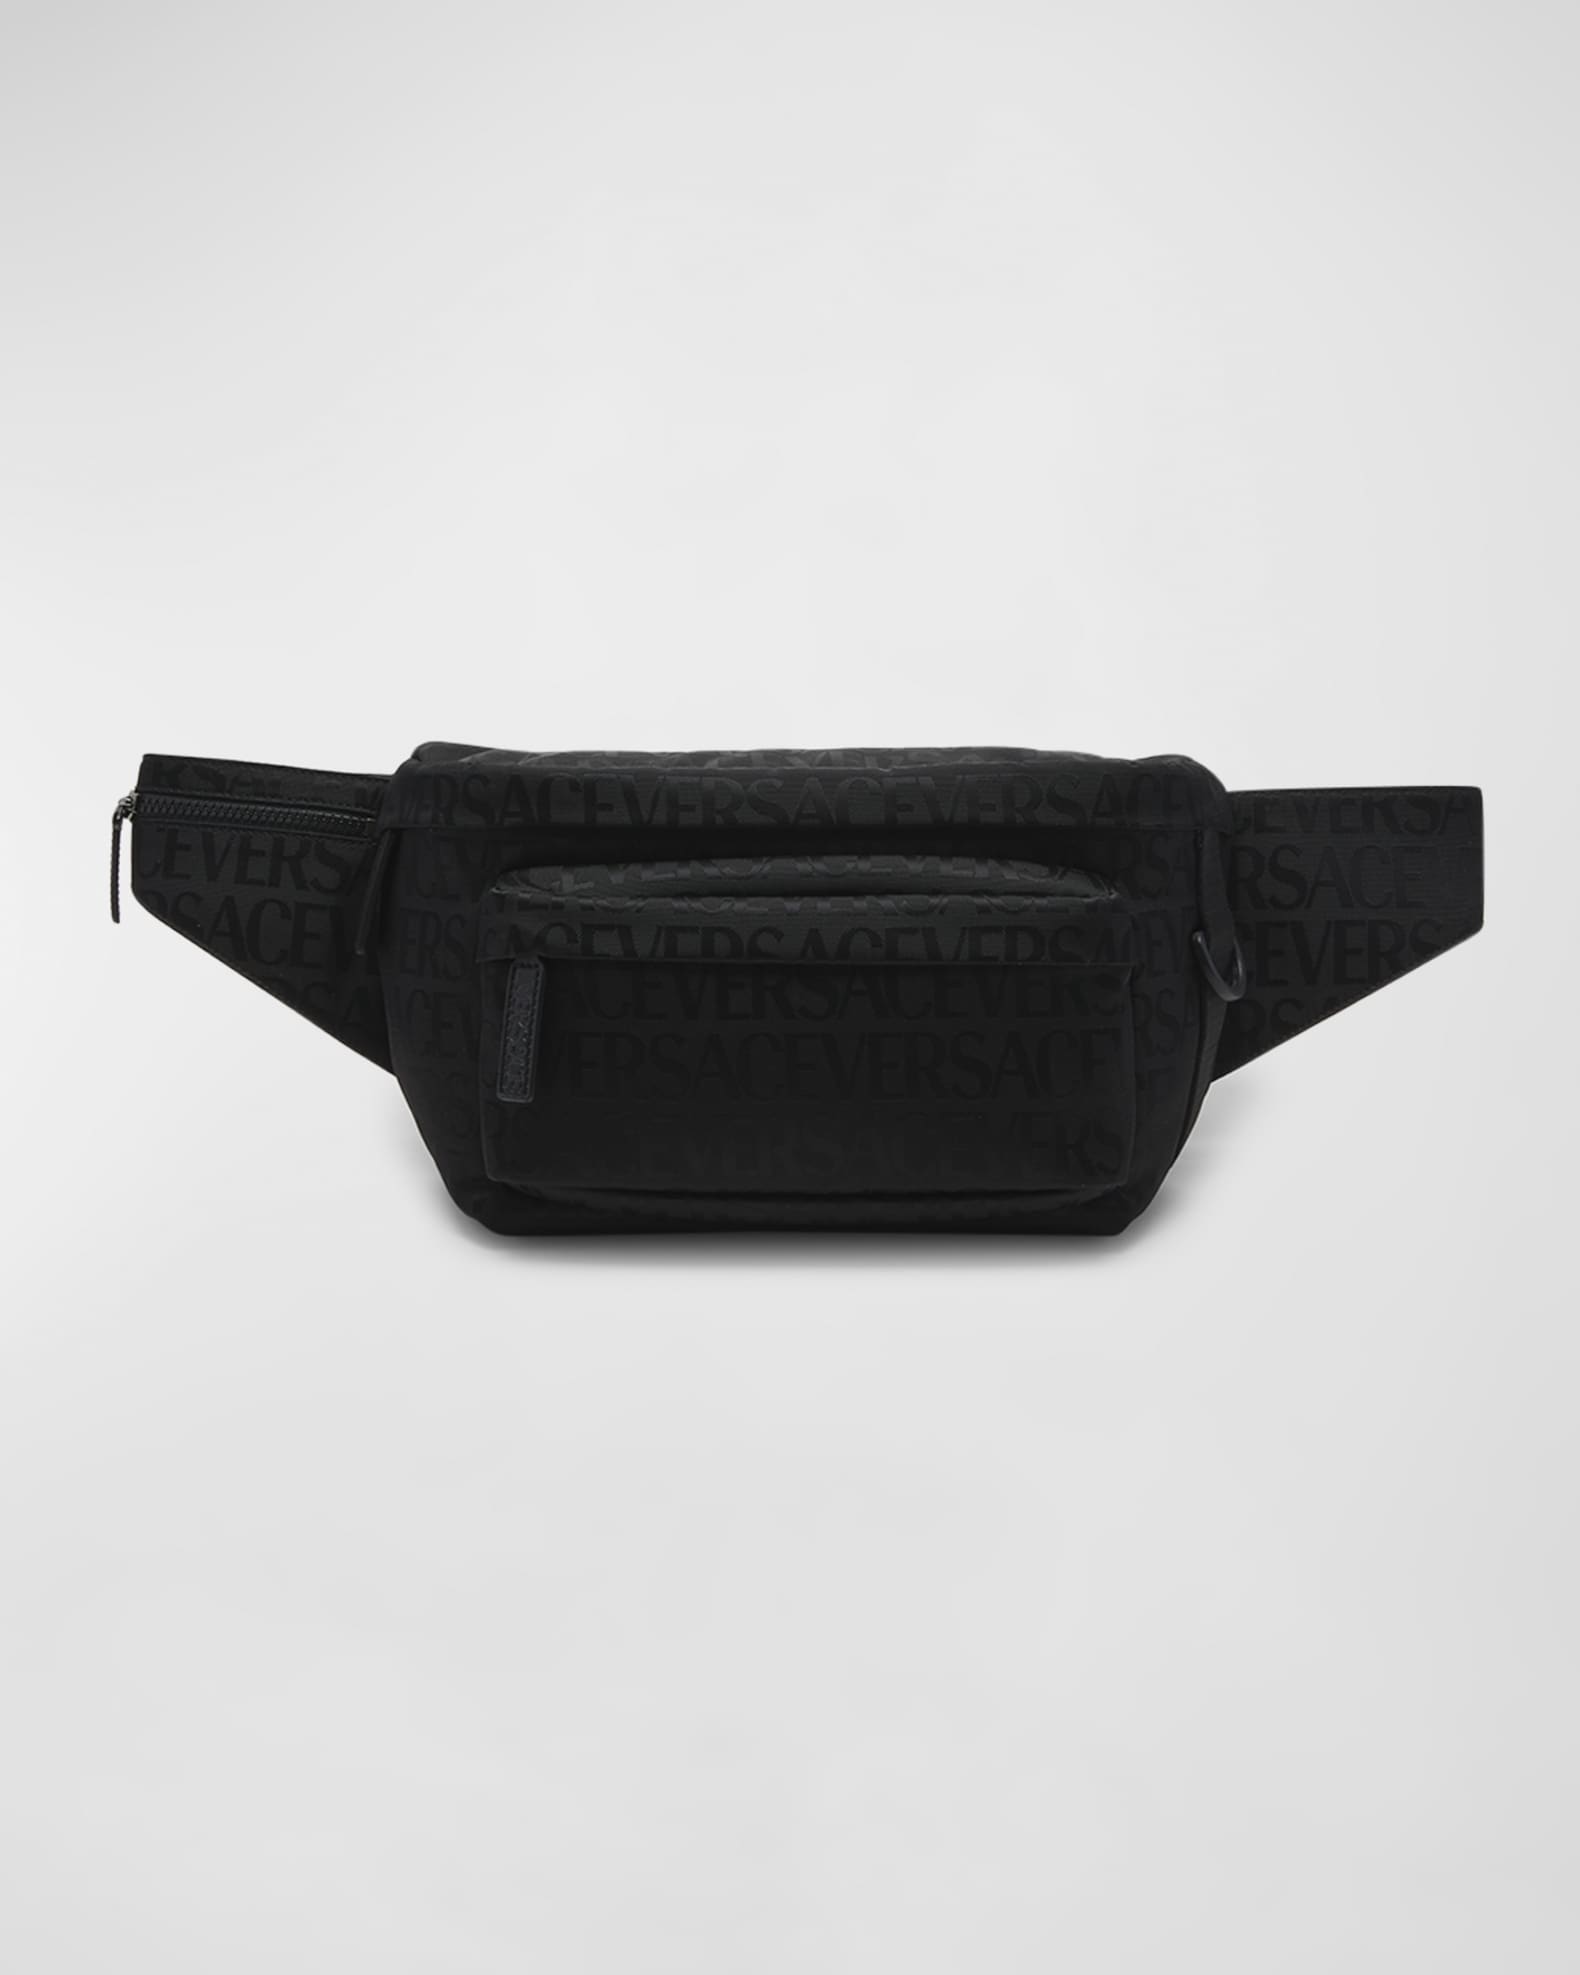 Moschino - Men's Jacquard Logo Beltpack Belt Bag - Black - Leather